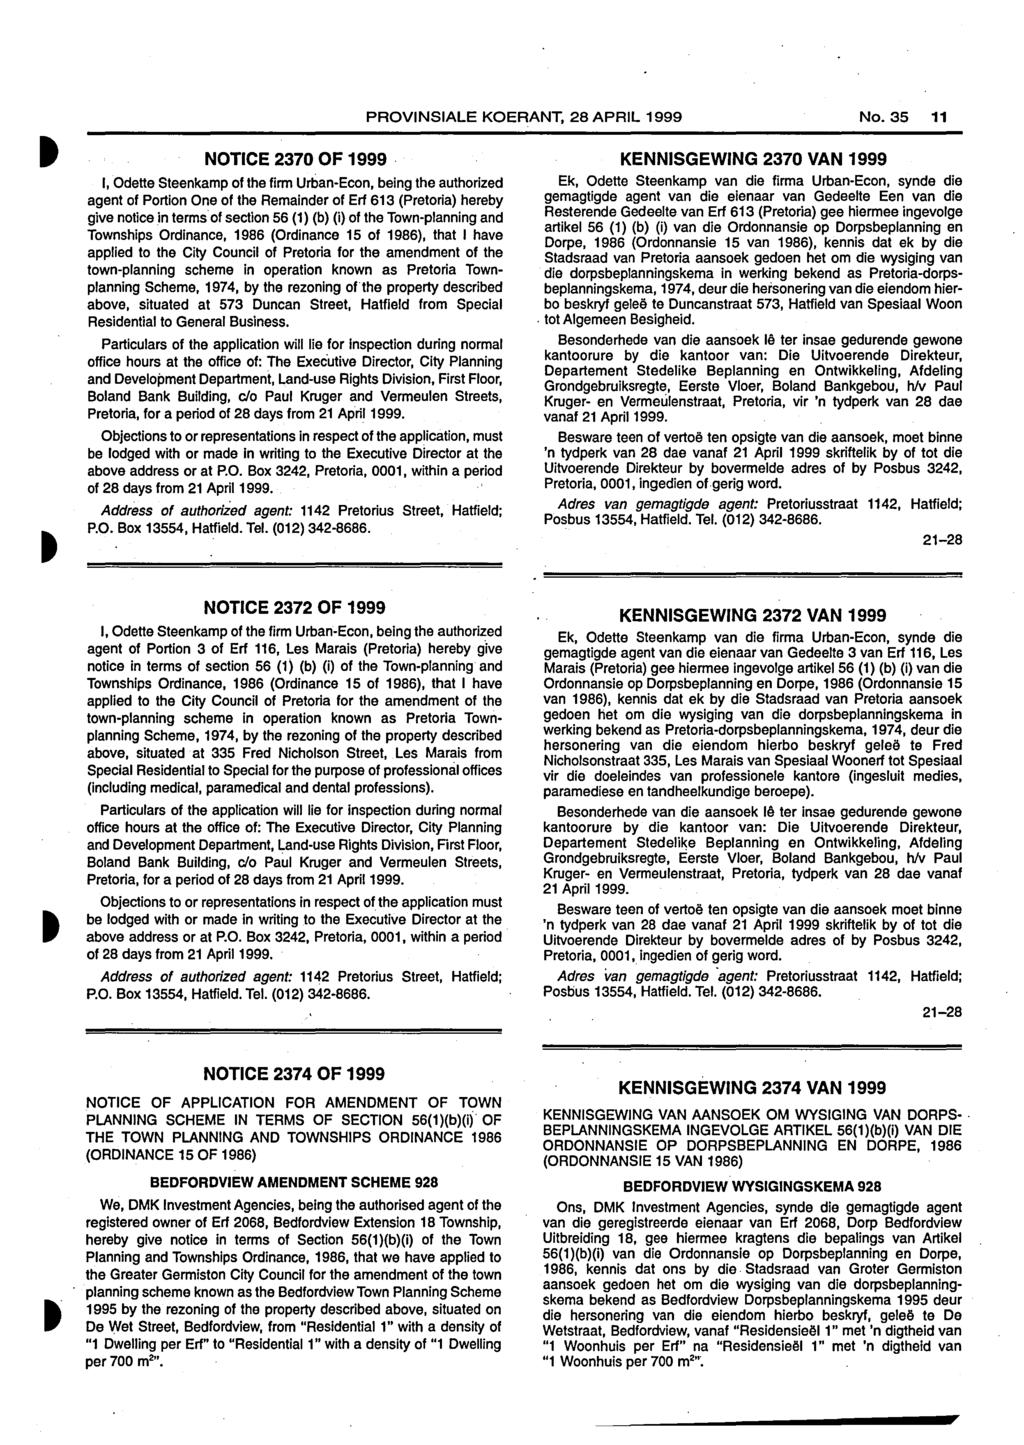 PROVINSIALE KOERANT, 28 APRIL 1999 No. 35 11 NOTICE 2370 OF 1999.